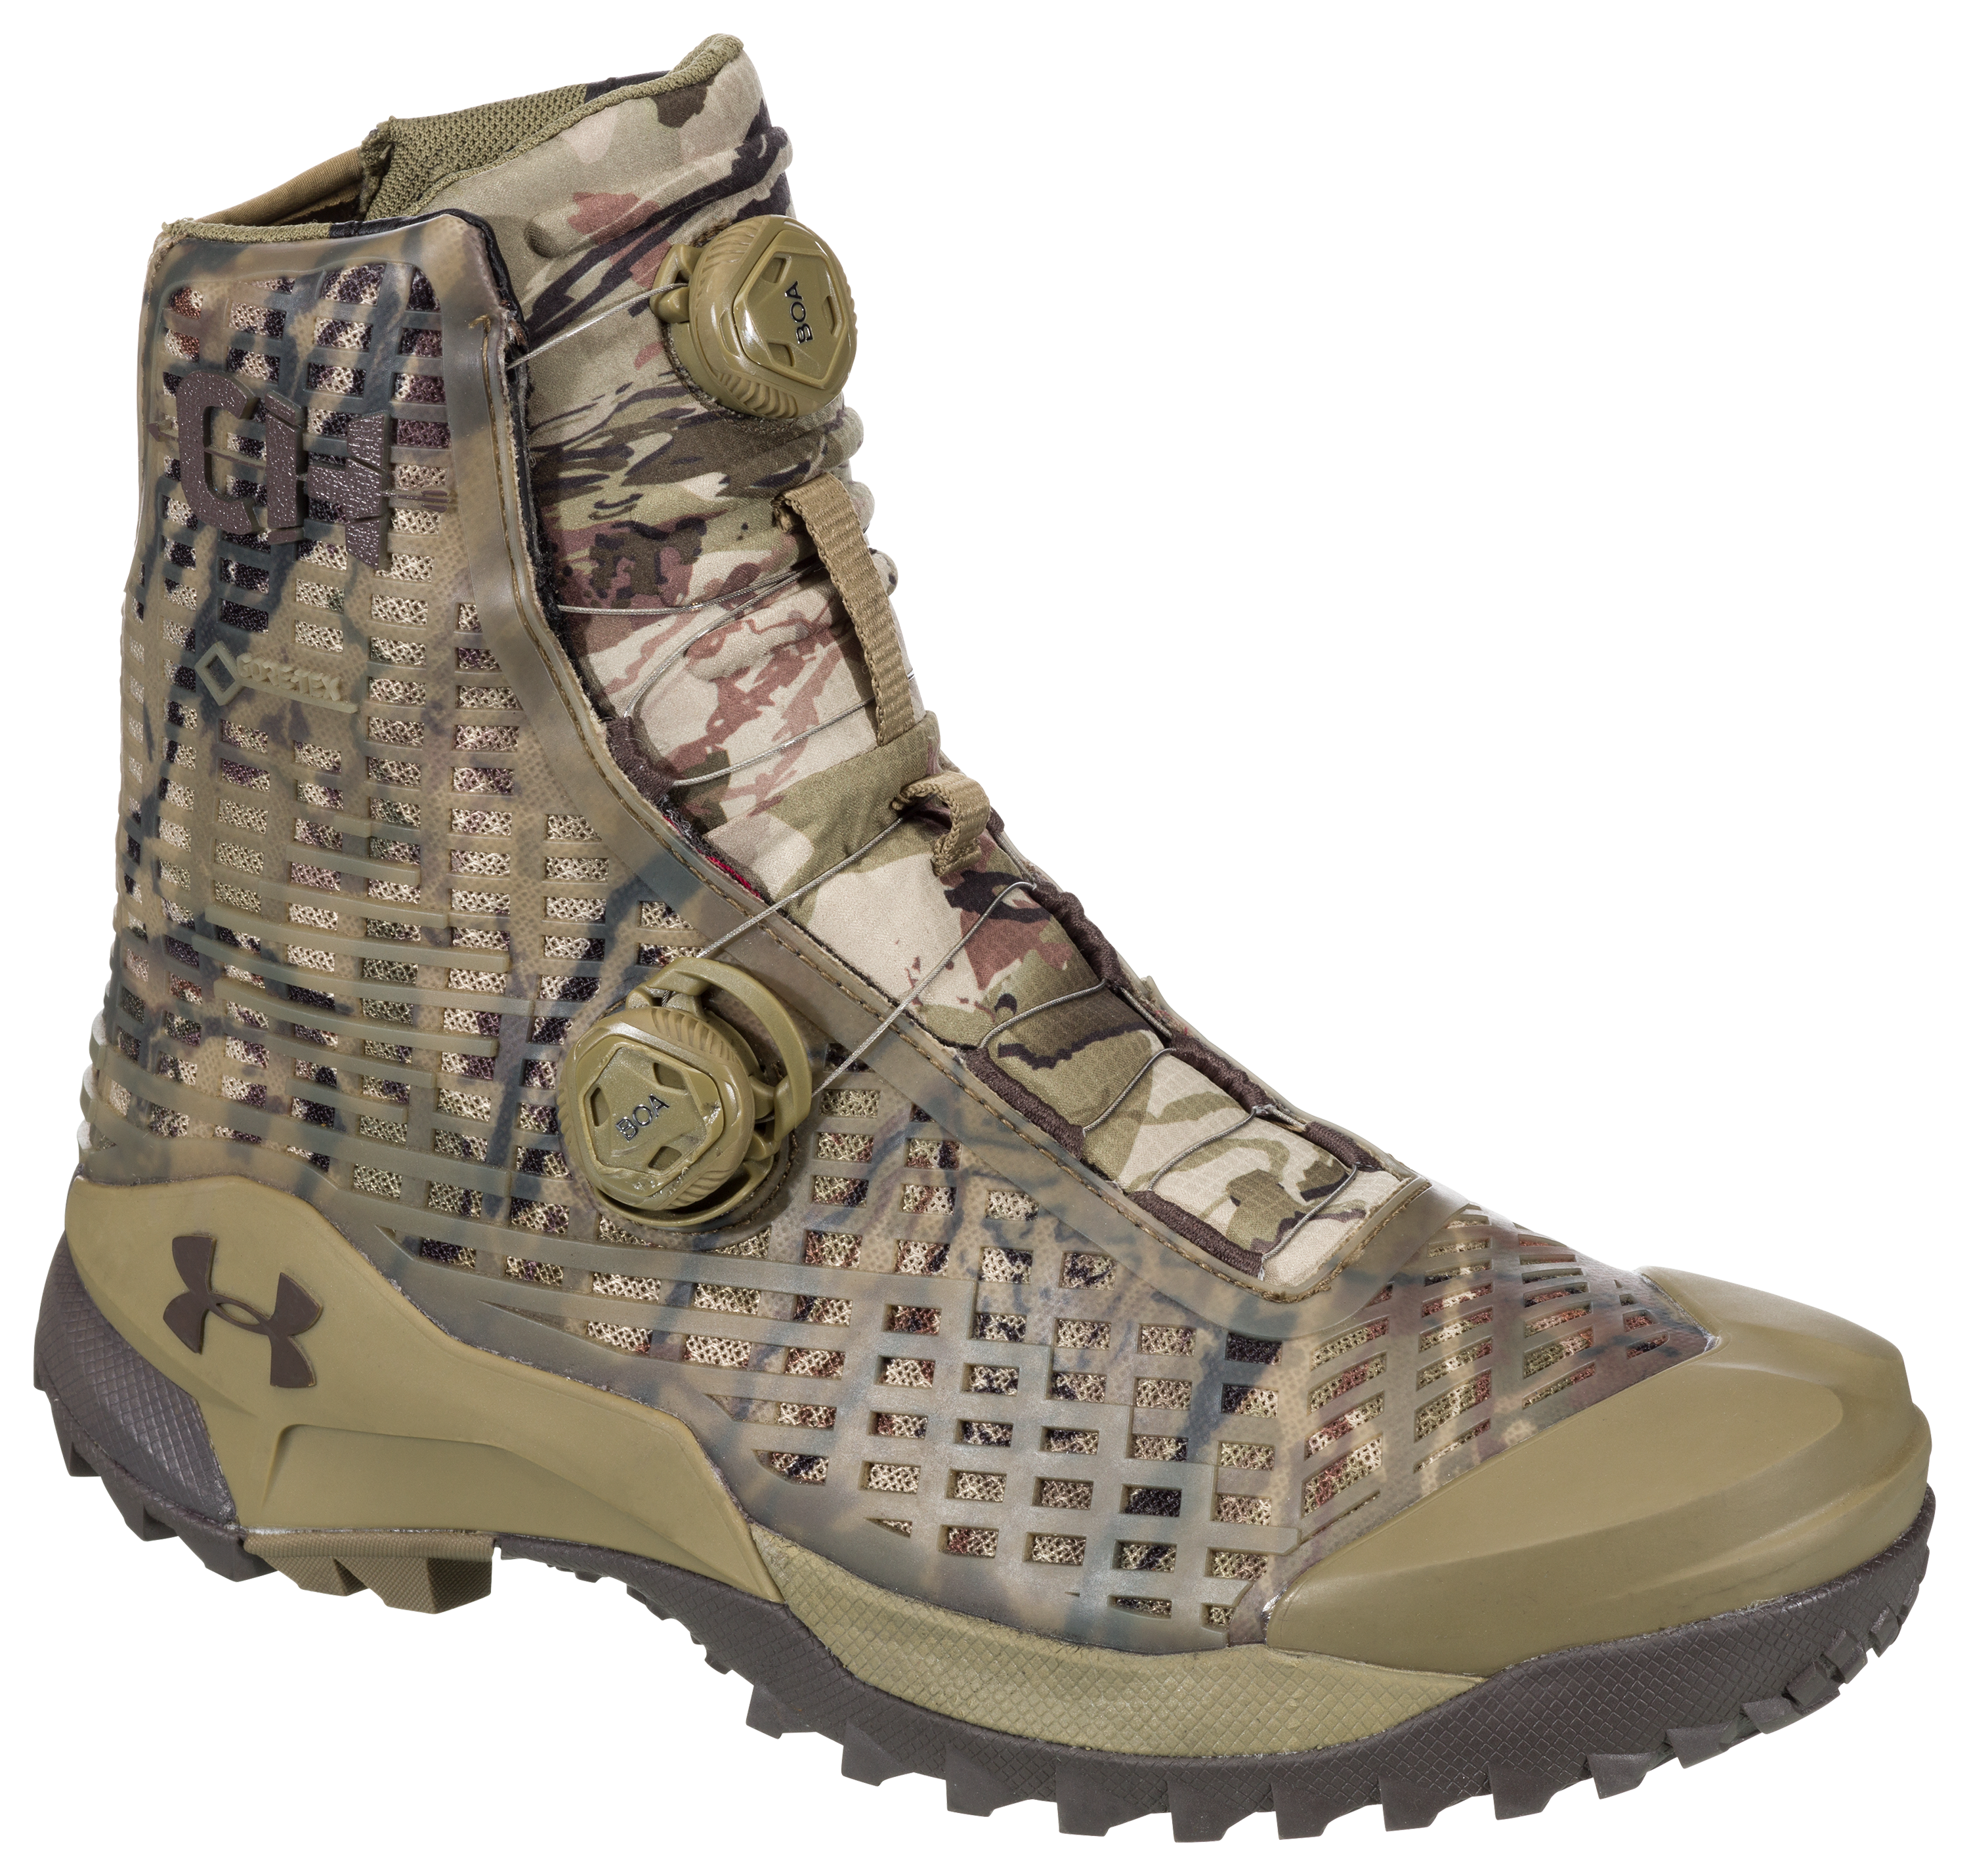 Under Armour CH1 GTX GORE-TEX Tactical Boots  for Men - Bayou Ridge Reaper Camo Barren - 8M